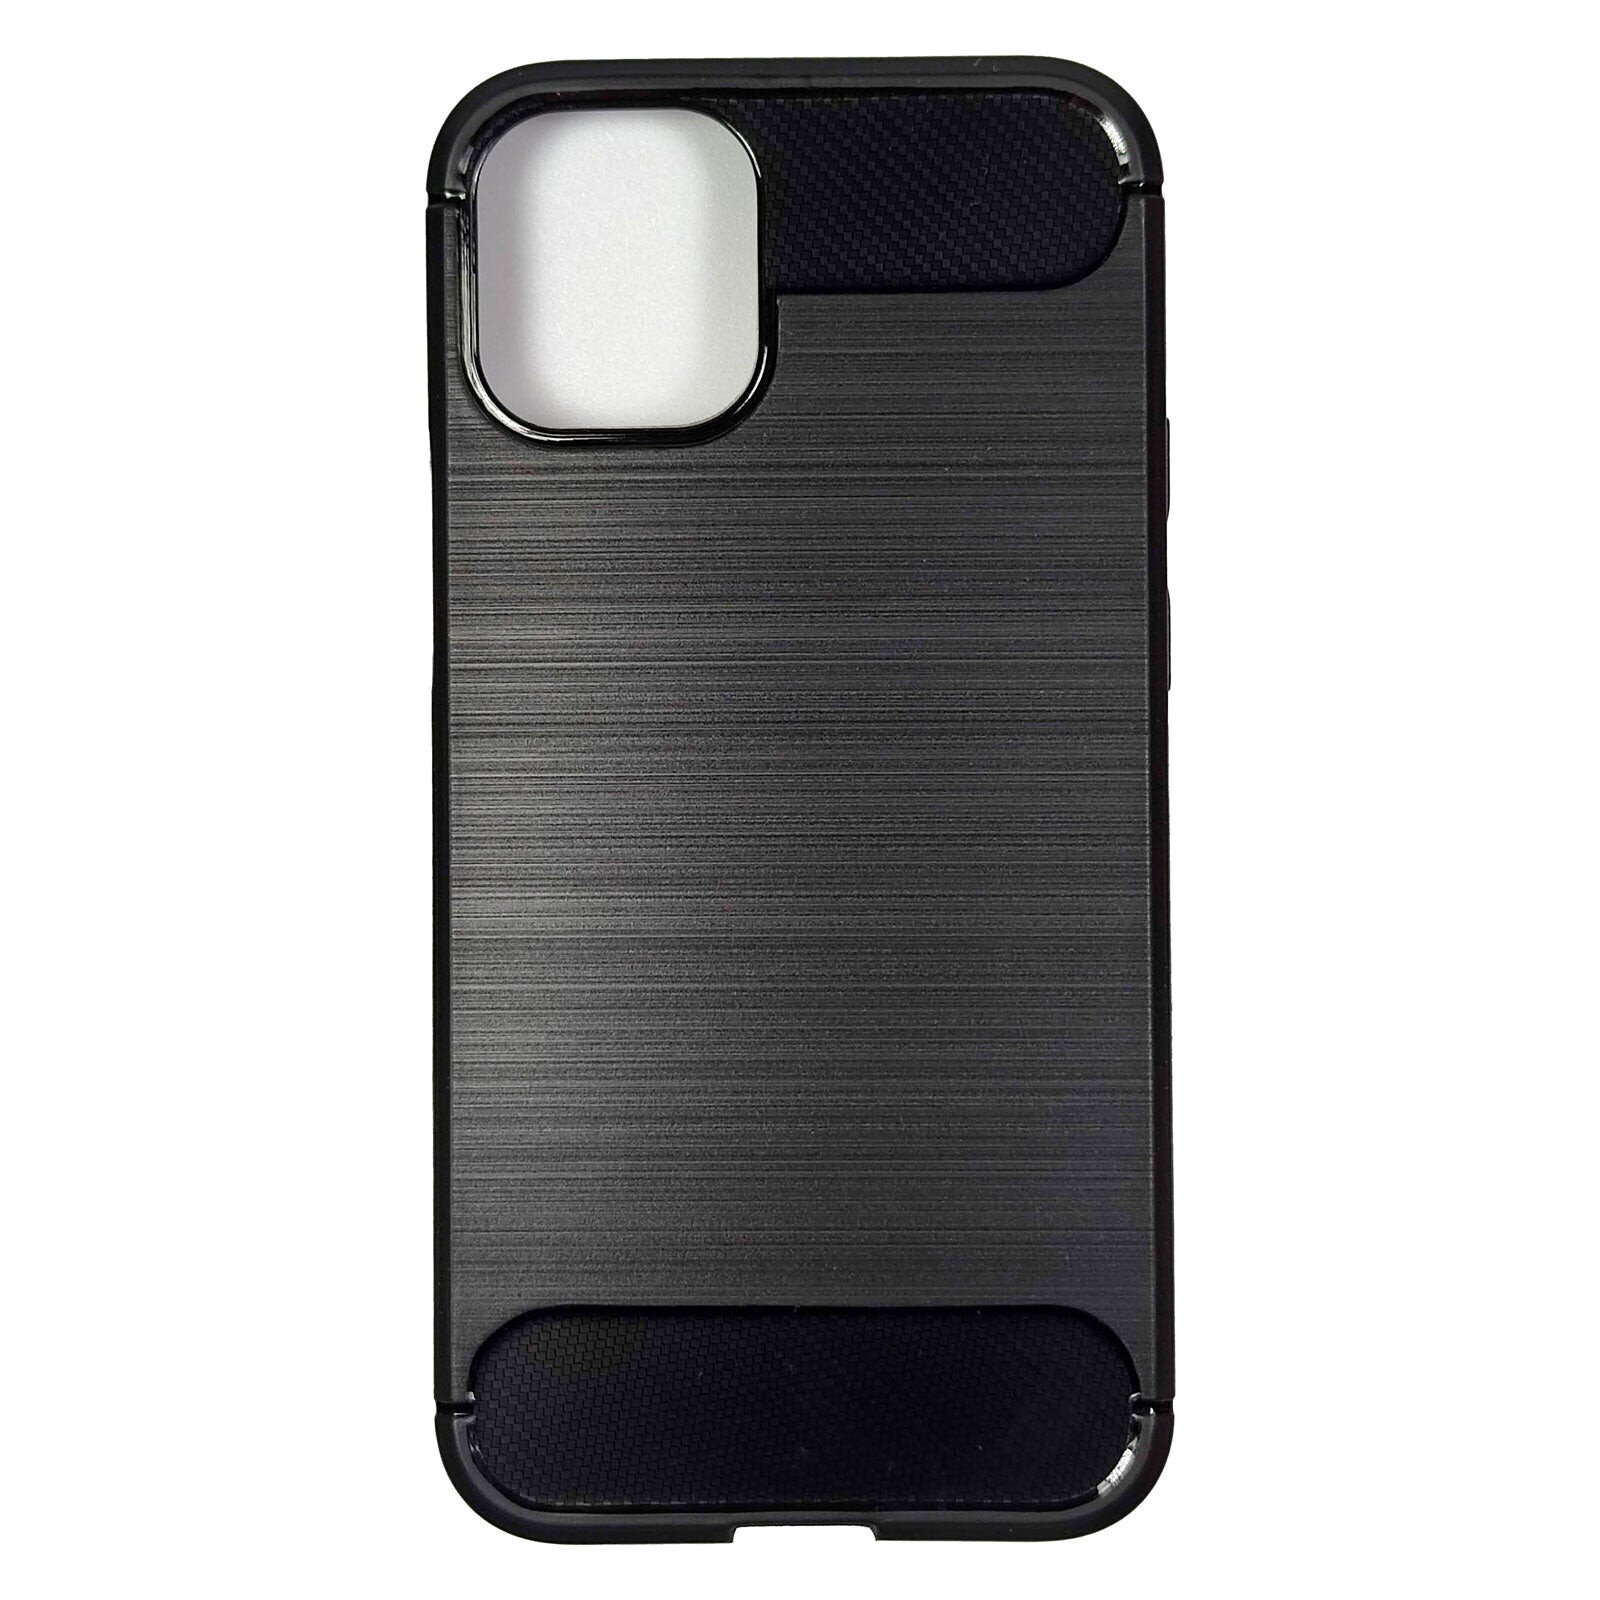 Husa Cover Silicon Carbon pentru iPhone 12 Mini Bulk Negru thumb